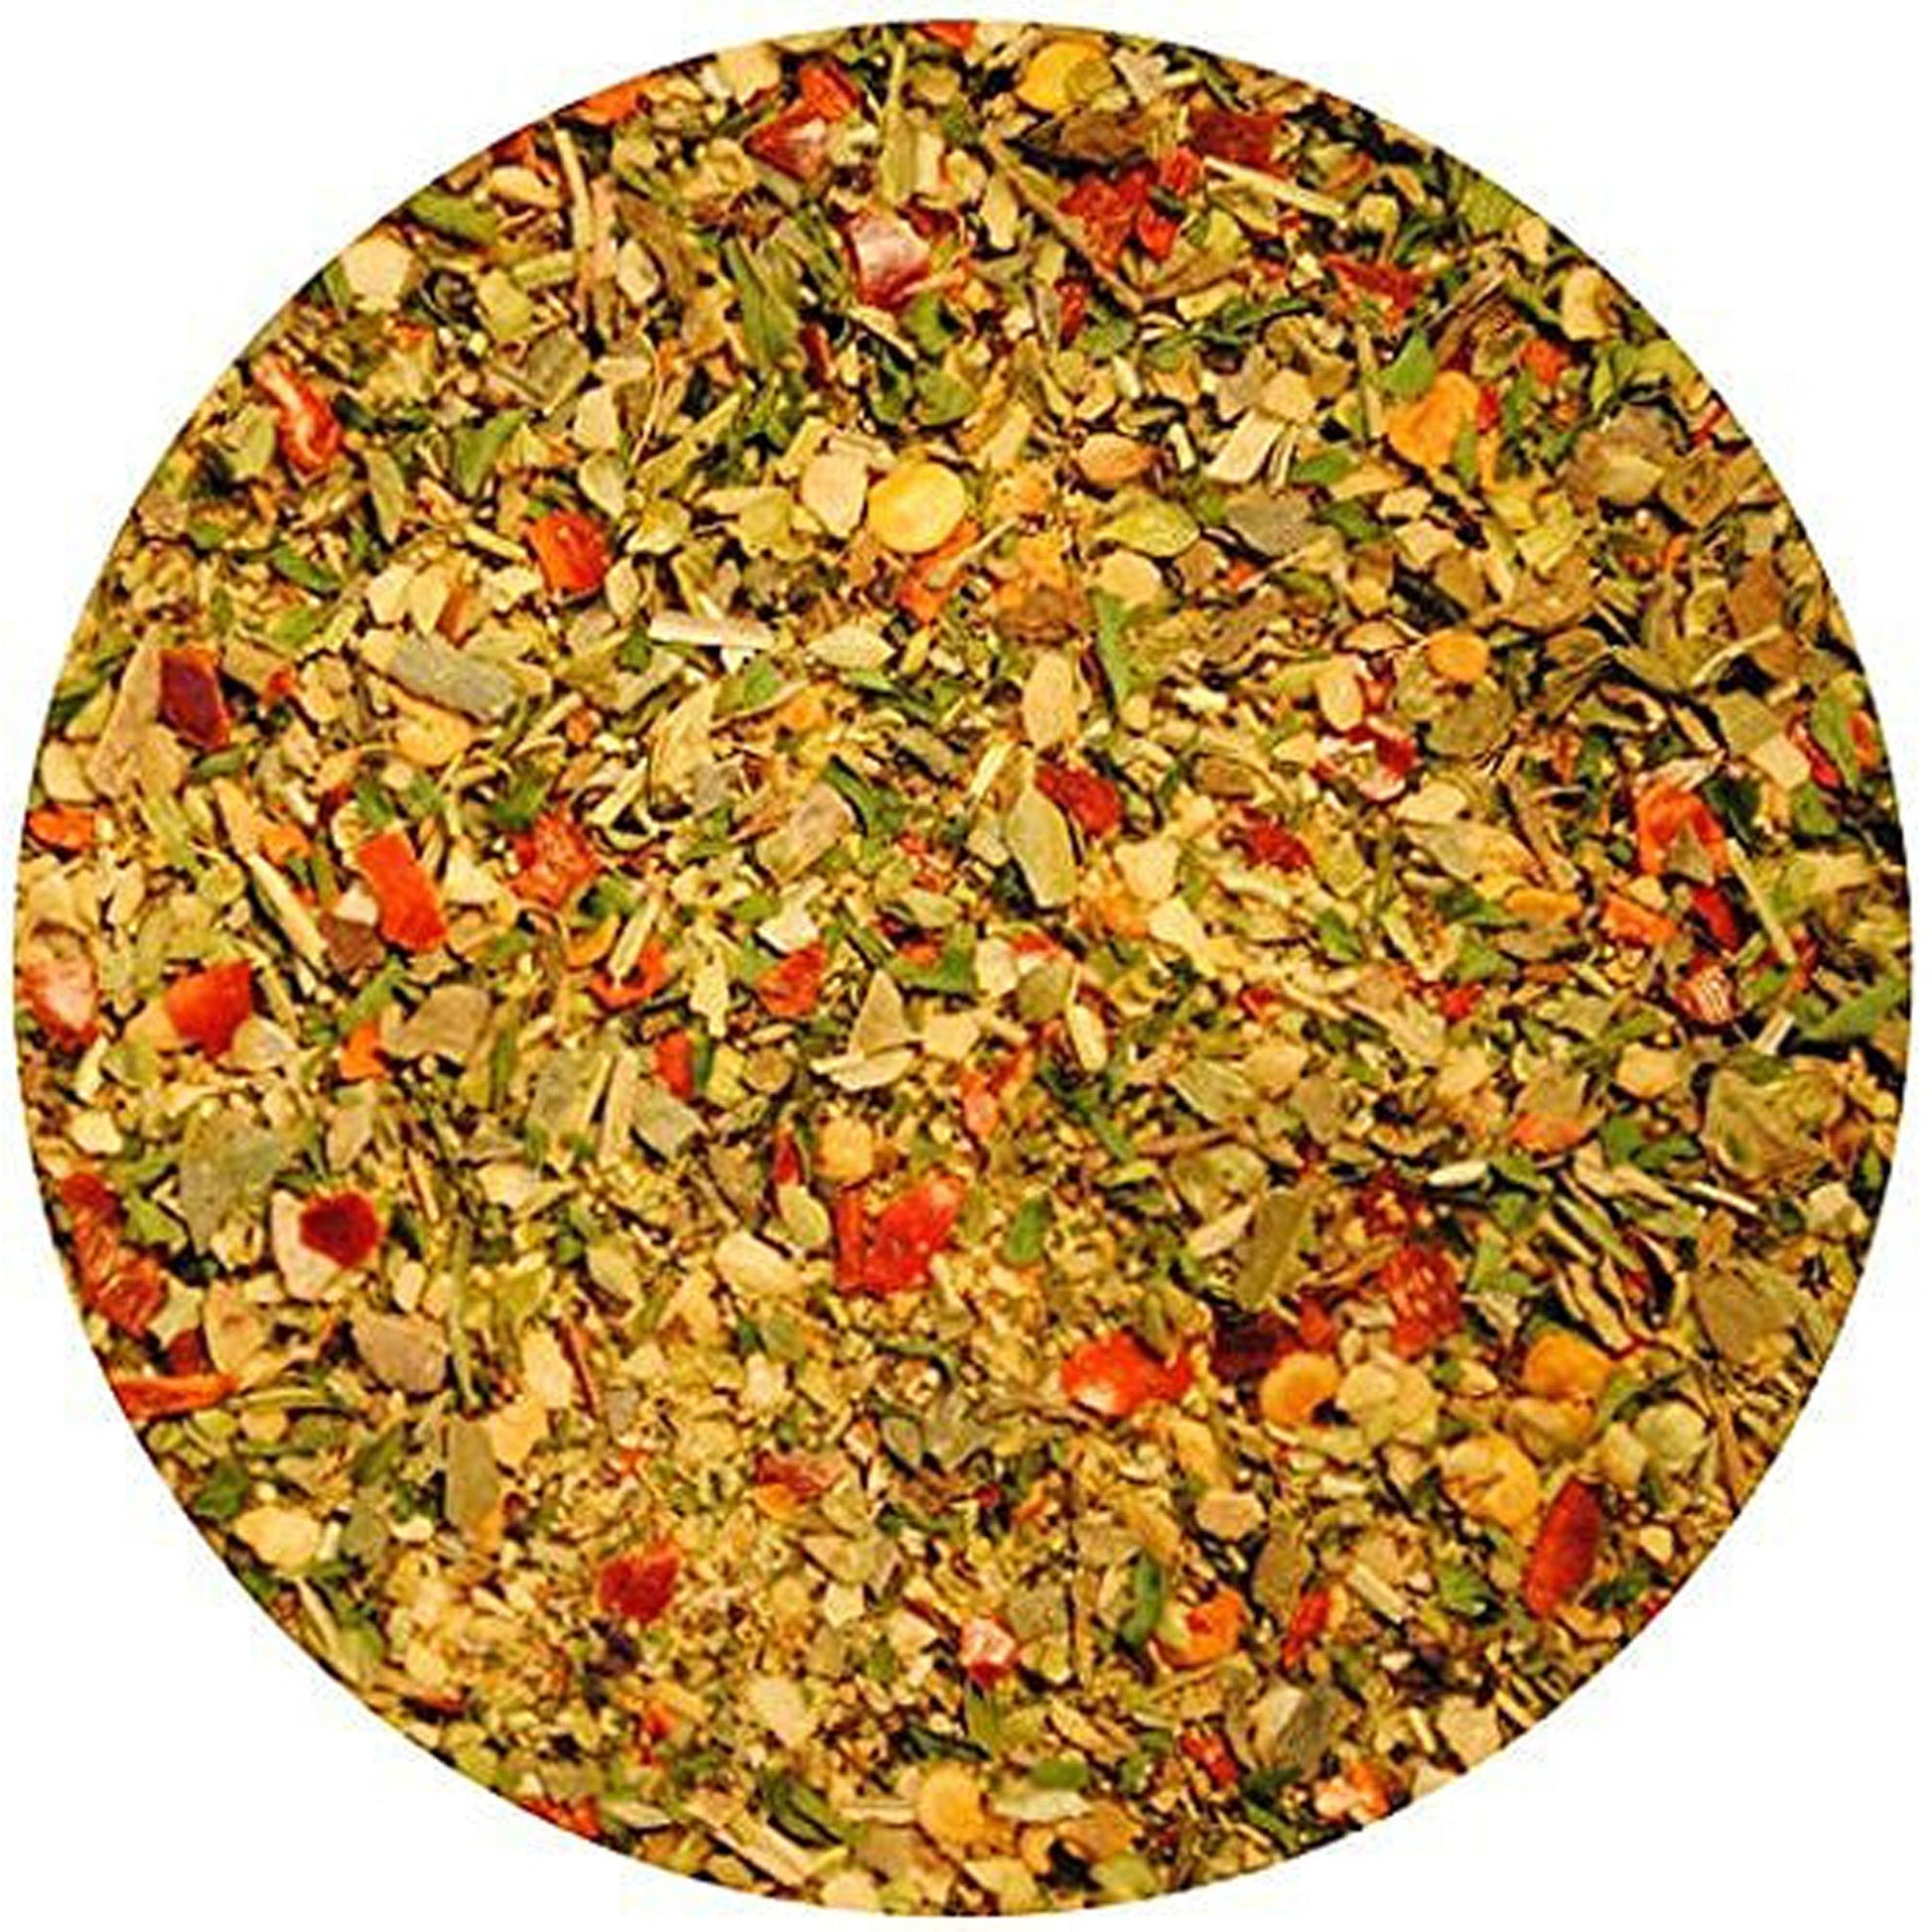 Tuscany Italian Spicy Seasoning 10oz Professional Easy Shaker - Unique Flavors Seasonings & Spices Unique Flavors LLC 